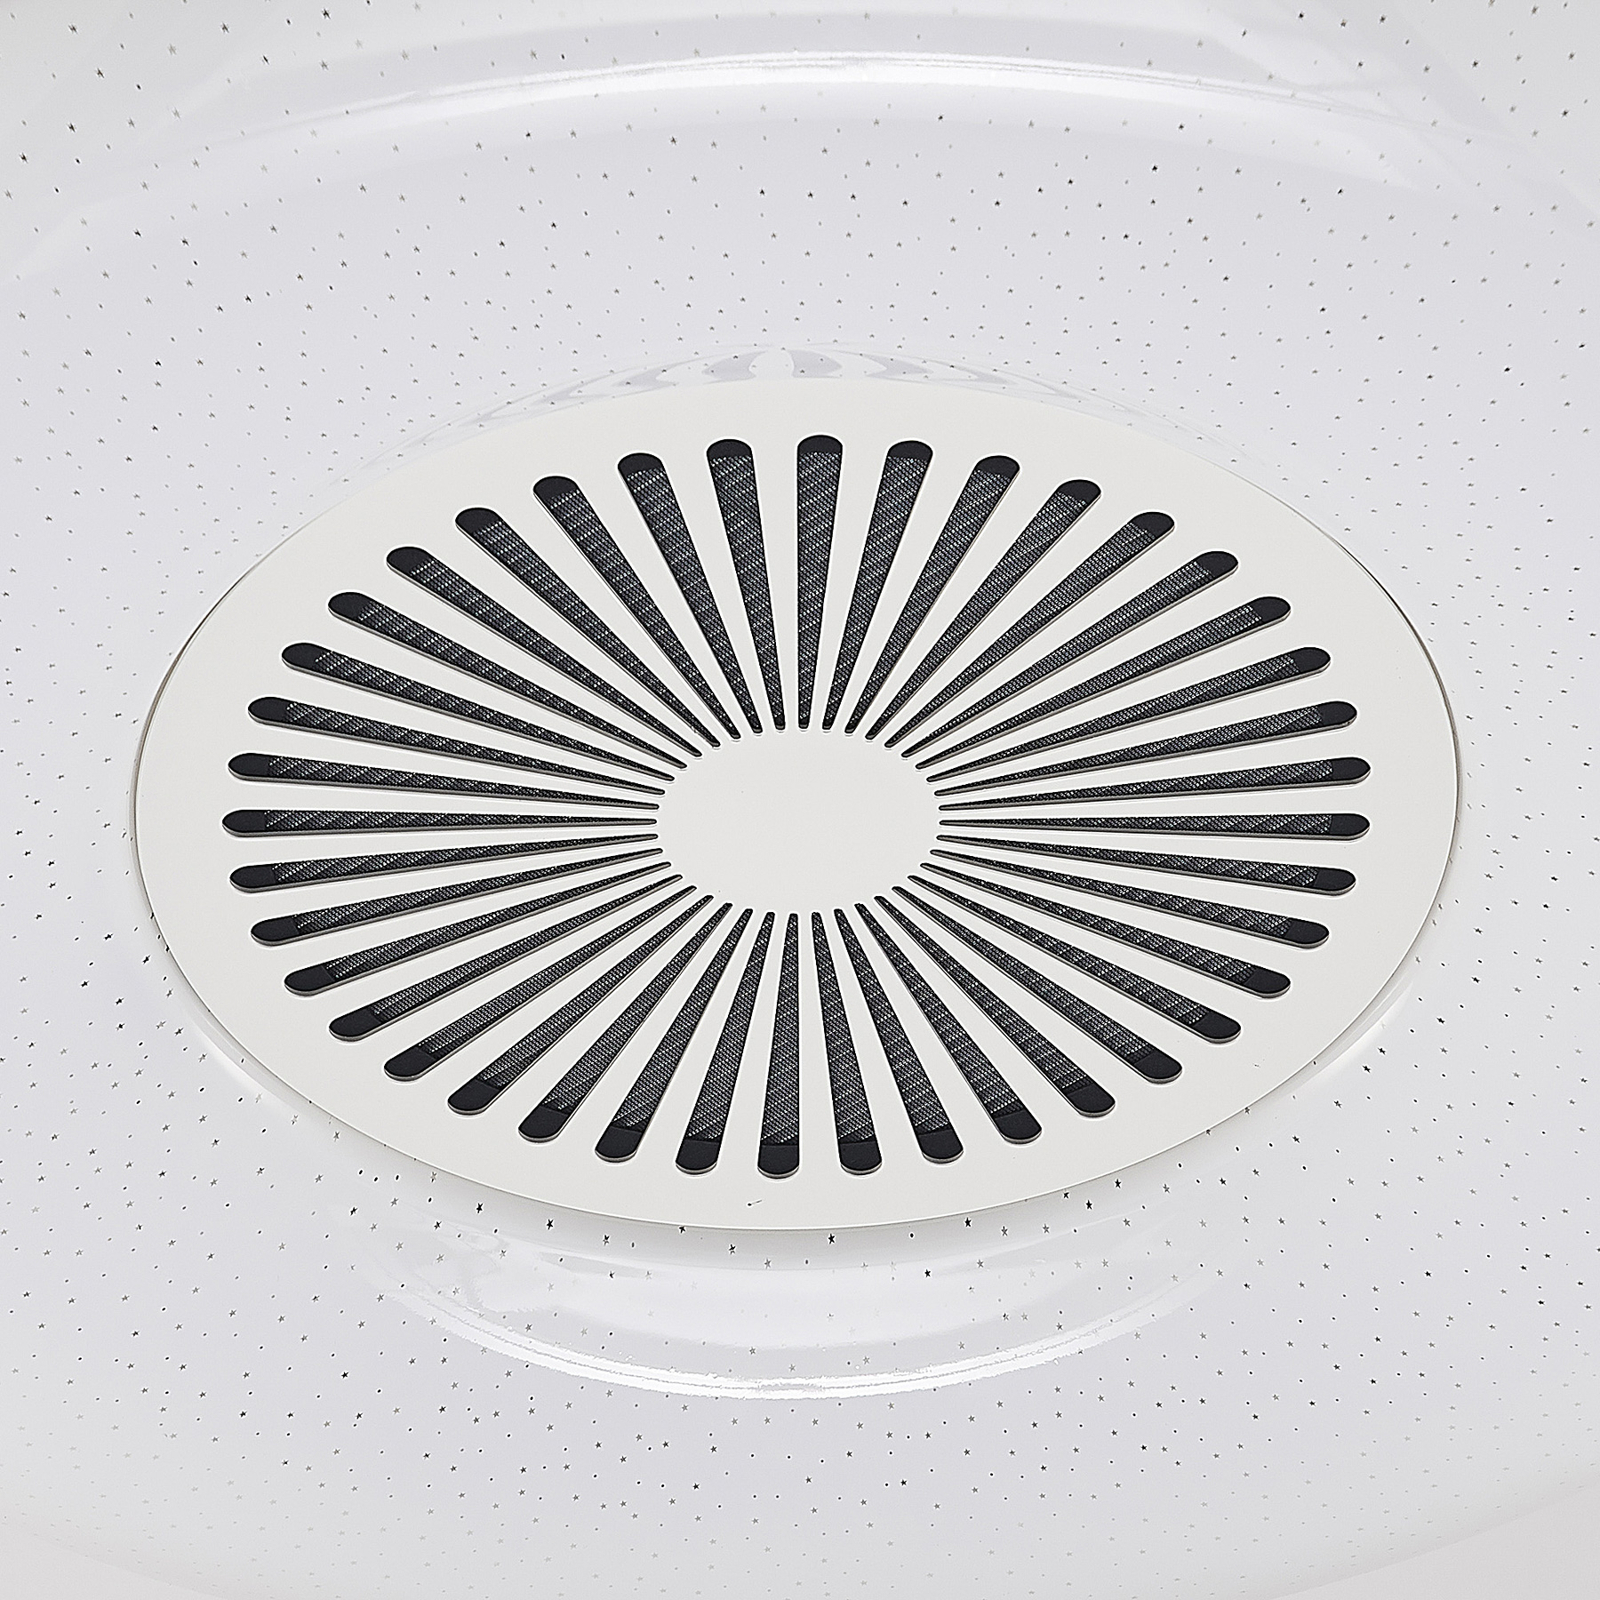 Starluna Myrte LED ceiling fan, air cleaner